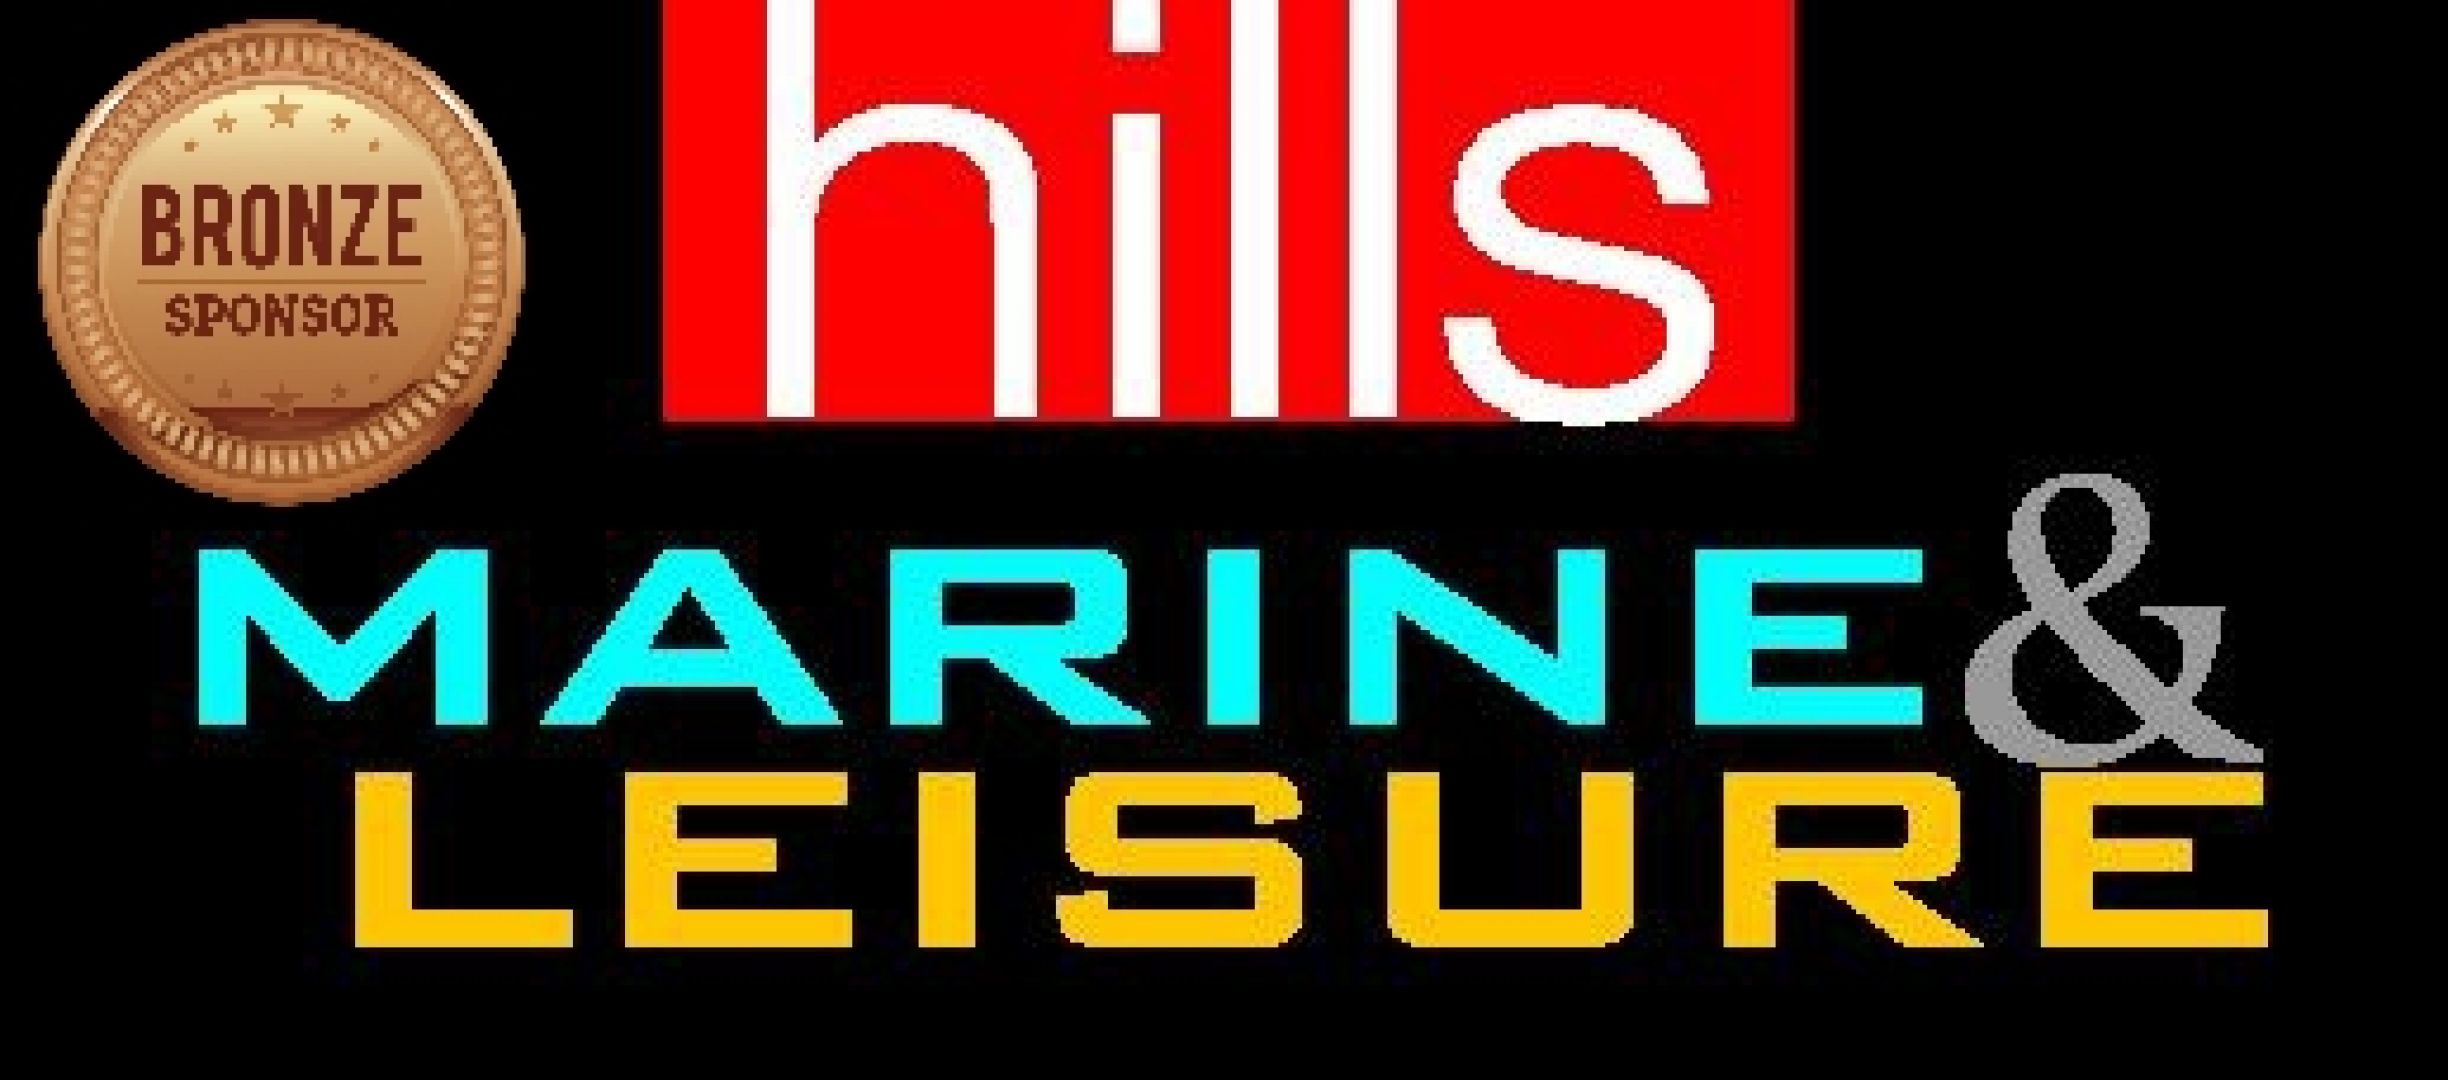 Hills Marine and Leisure - Bronze SPONSOR